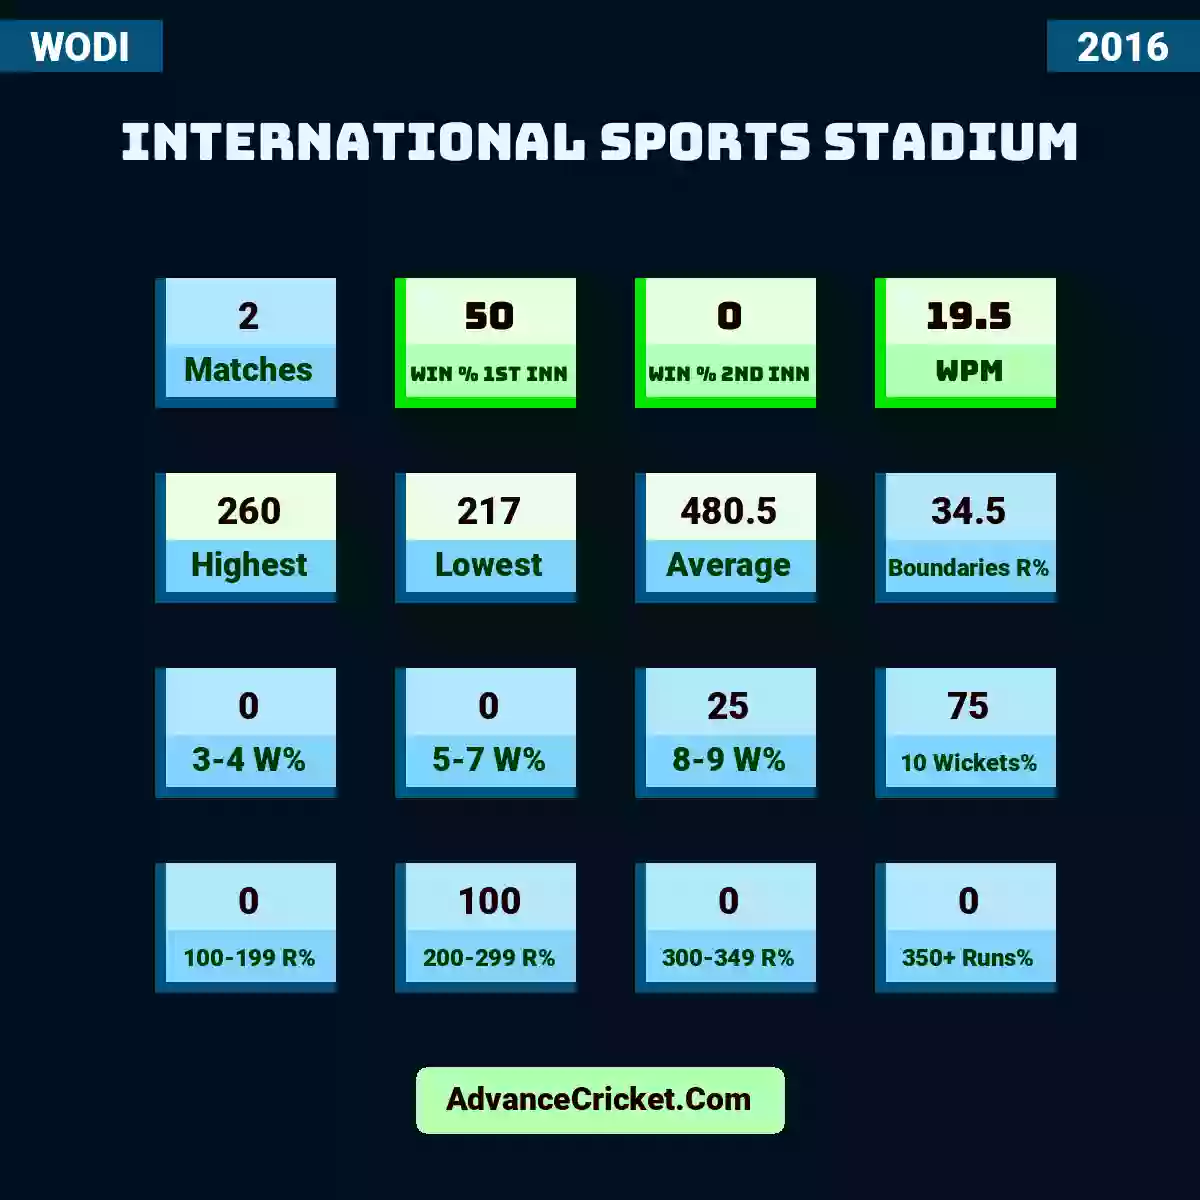 Image showing International Sports Stadium with Matches: 2, Win % 1st Inn: 50, Win % 2nd Inn: 0, WPM: 19.5, Highest: 260, Lowest: 217, Average: 480.5, Boundaries R%: 34.5, 3-4 W%: 0, 5-7 W%: 0, 8-9 W%: 25, 10 Wickets%: 75, 100-199 R%: 0, 200-299 R%: 100, 300-349 R%: 0, 350+ Runs%: 0.